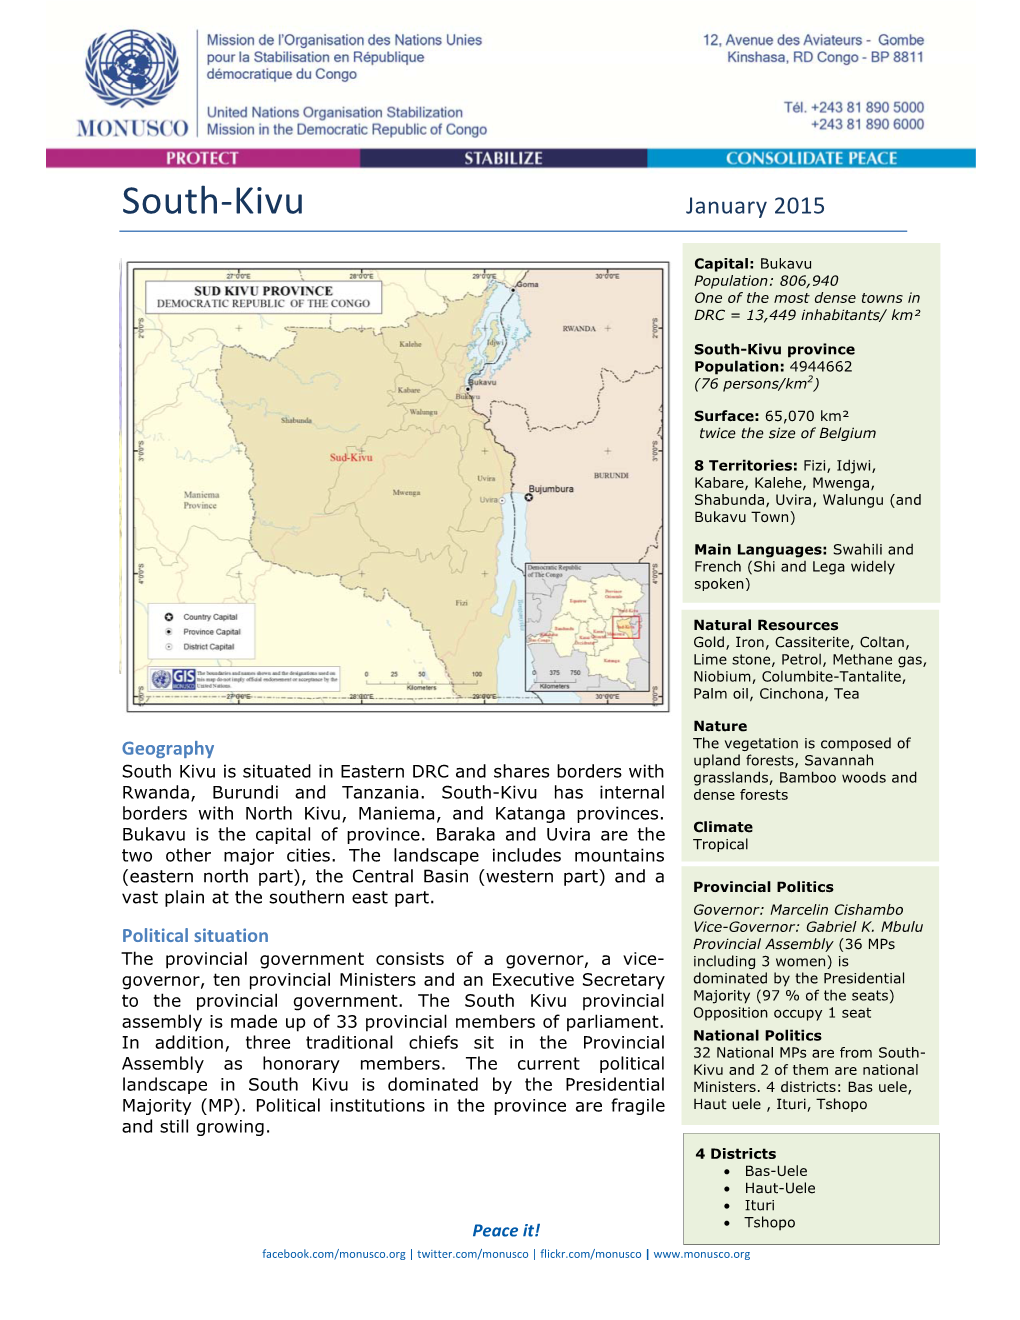 South Kivu Factsheet